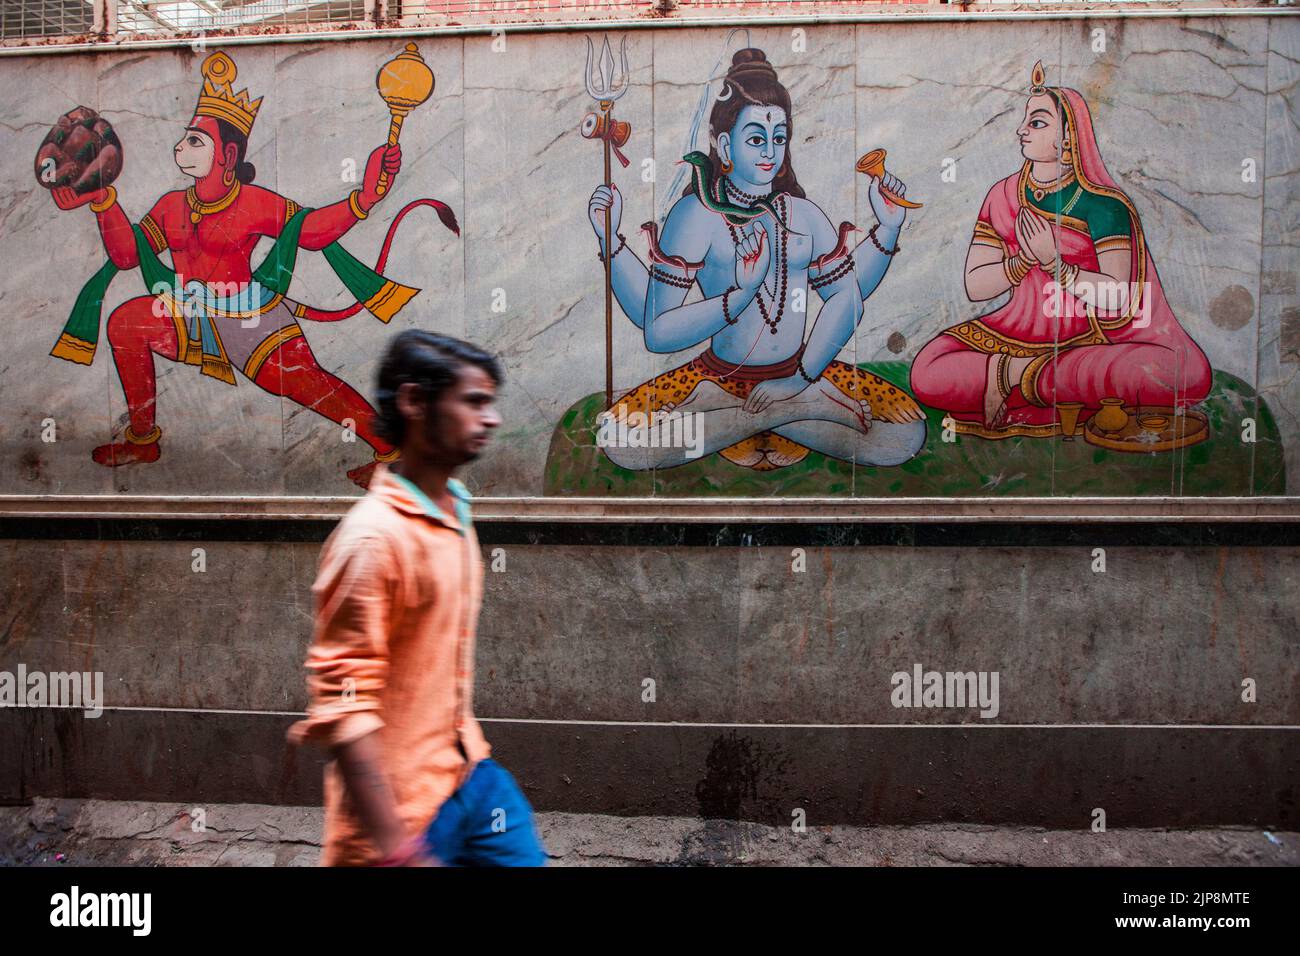 Pittura murale di divinità indù Shiva e Hanuman, Varanasi, Banaras, Benaras, Kashi, Utttar Pradesh, India Foto Stock